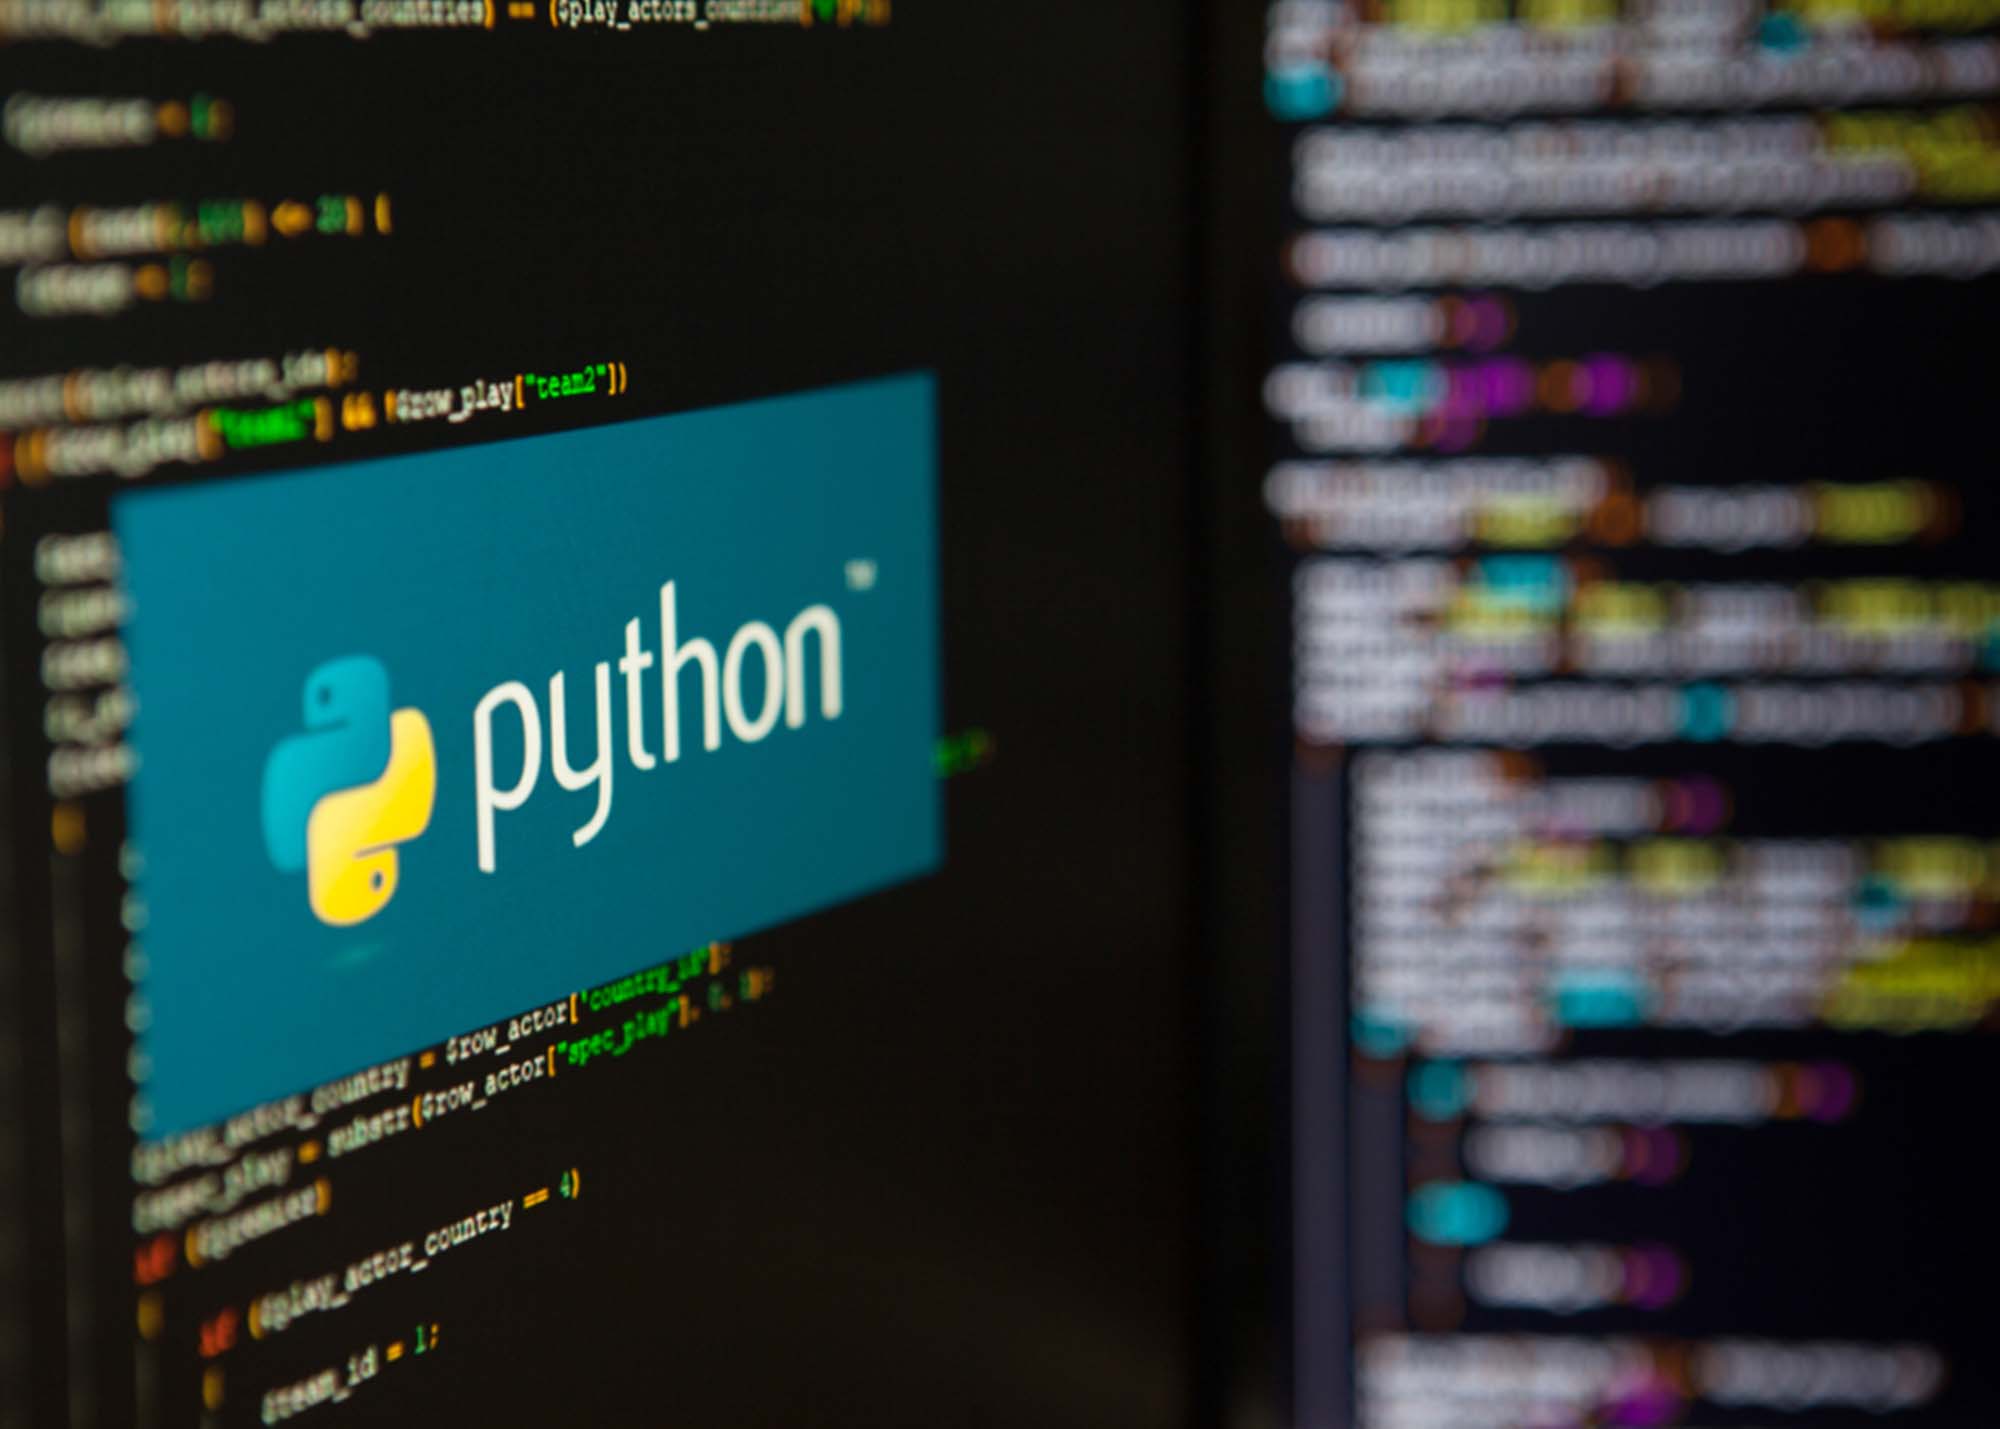 Basics of programming in python